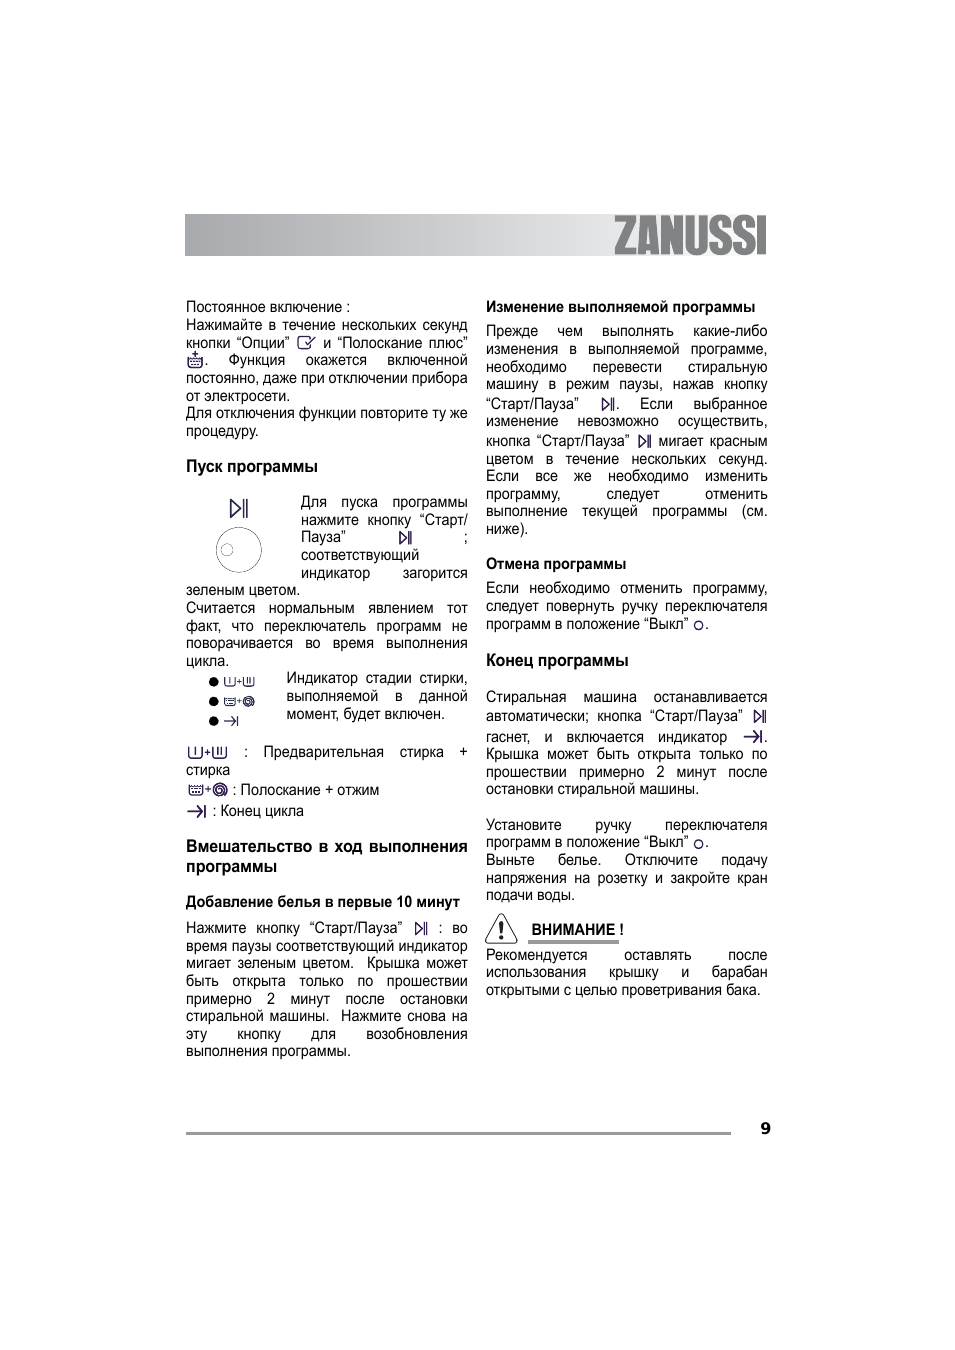 Zanussi zwy 180 ru: инструкция и руководство на русском